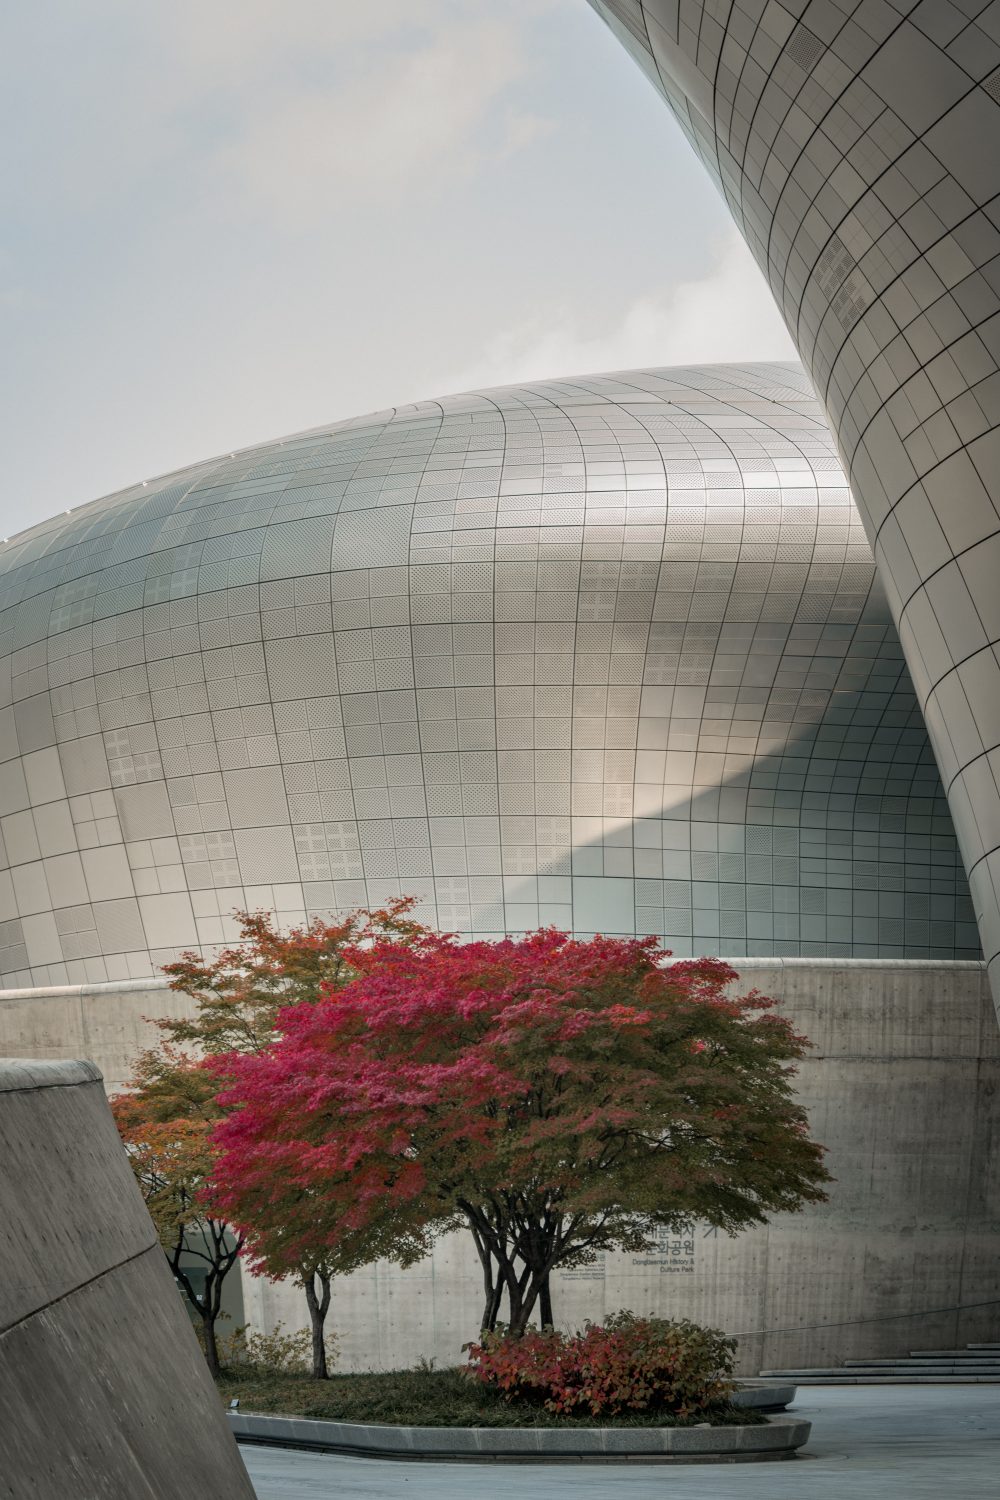 dongdaemun design plaza with maple trees